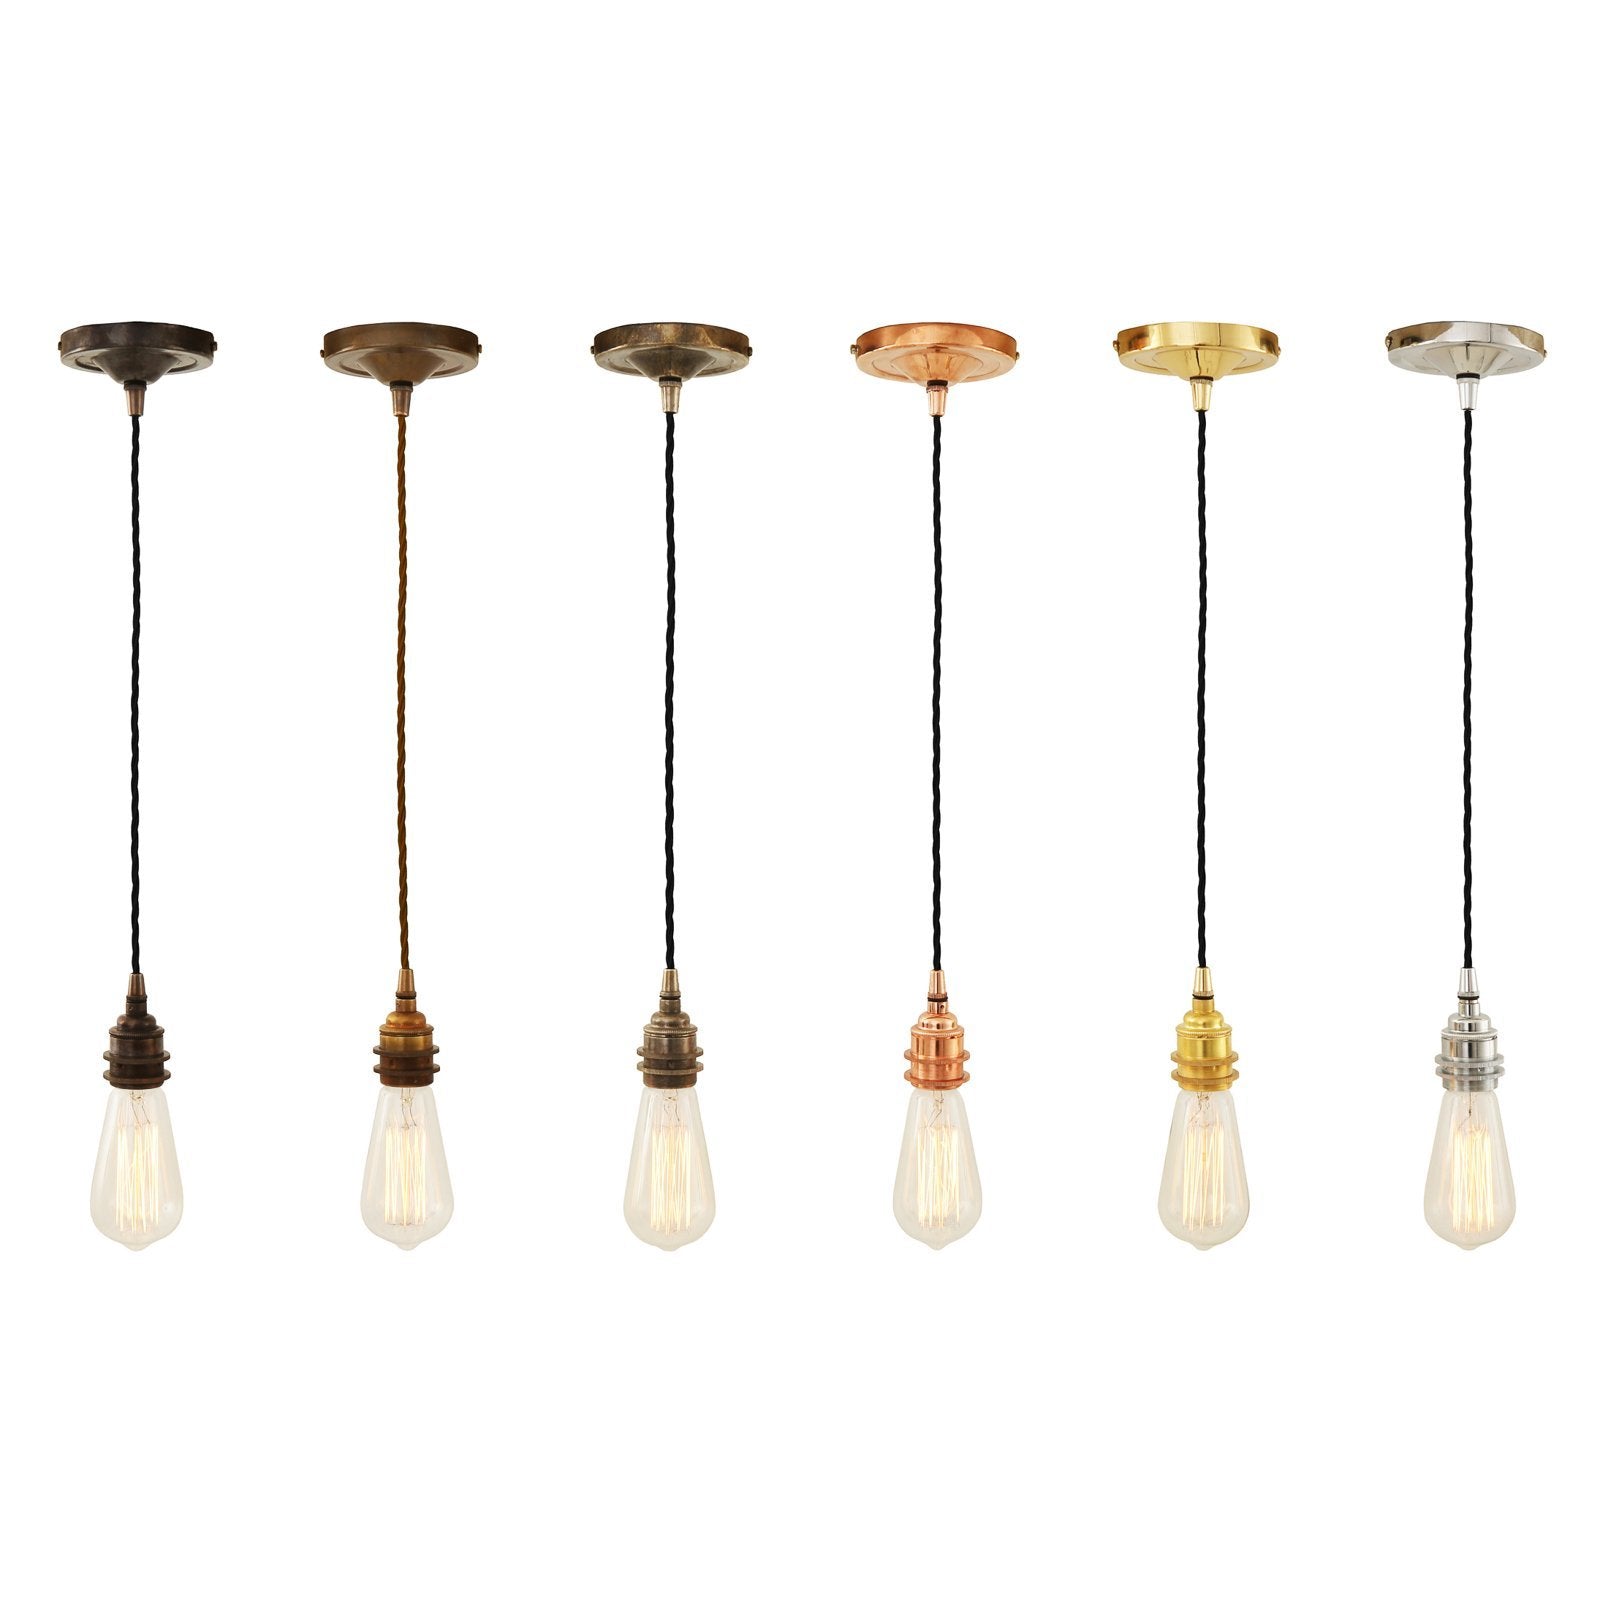 Lome Vintage Braided Pendant Light - Pendant Lights from RETROLIGHT. Made by Mullan Lighting.